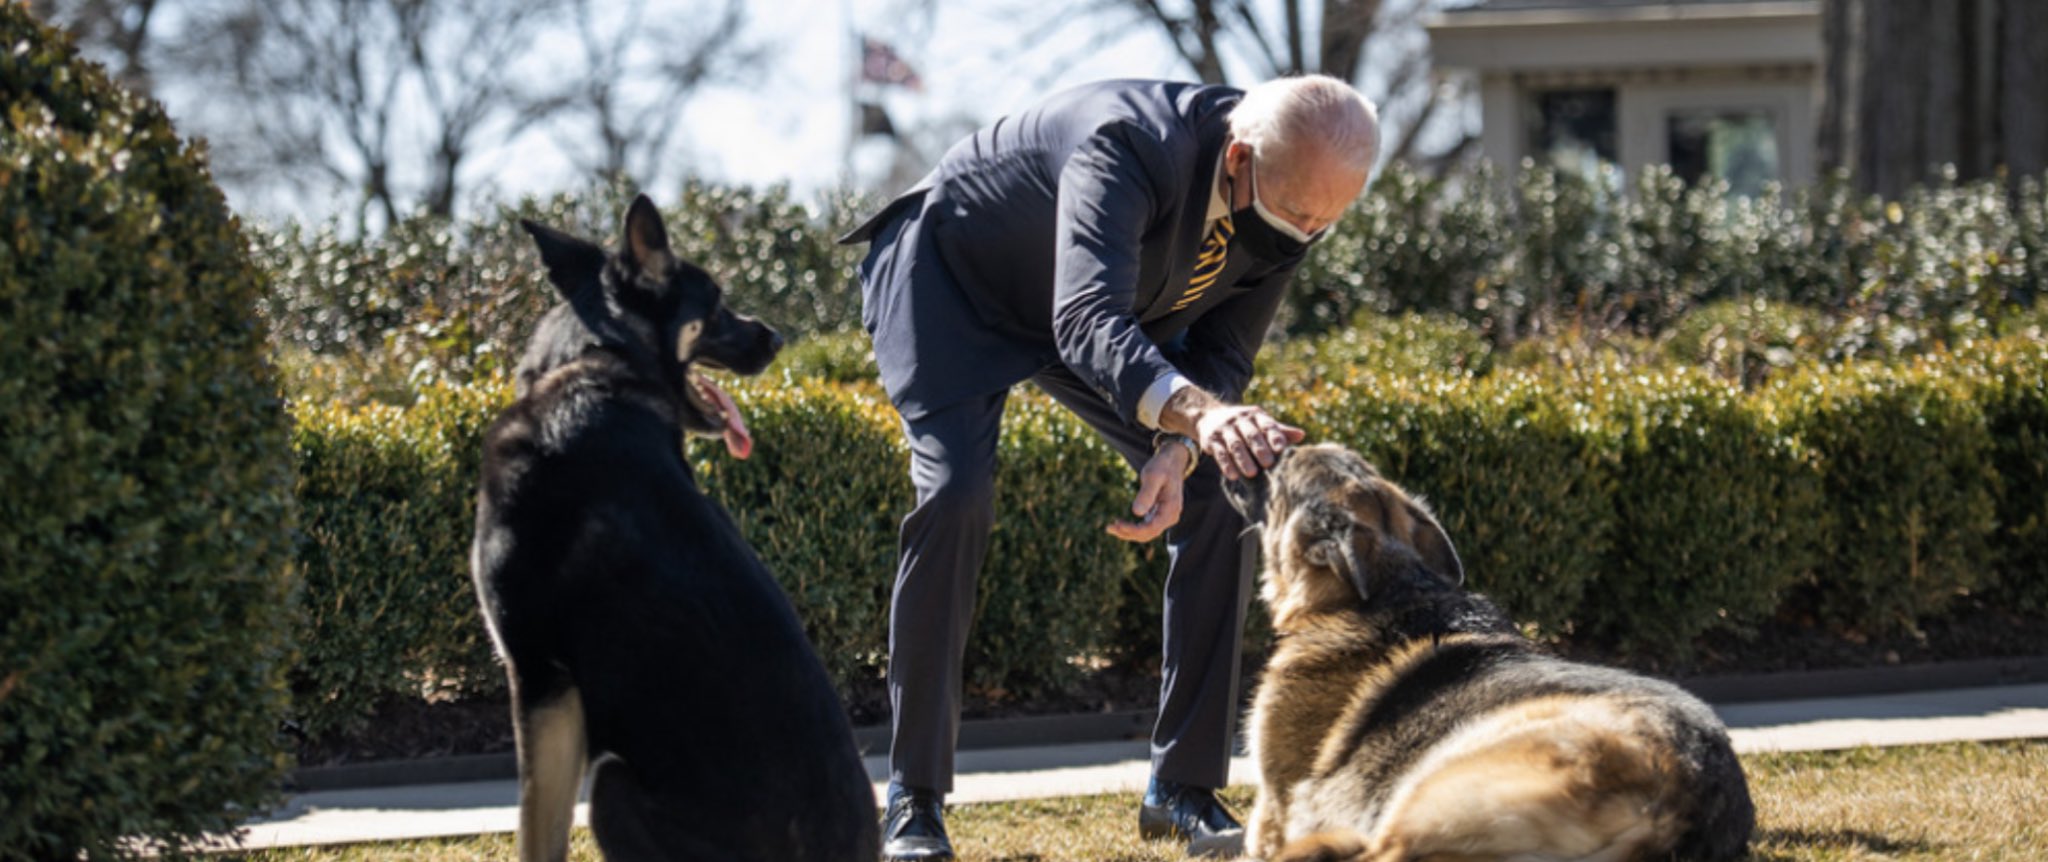 Mascota de la familia Biden recibe ayuda profesional tras incidentes